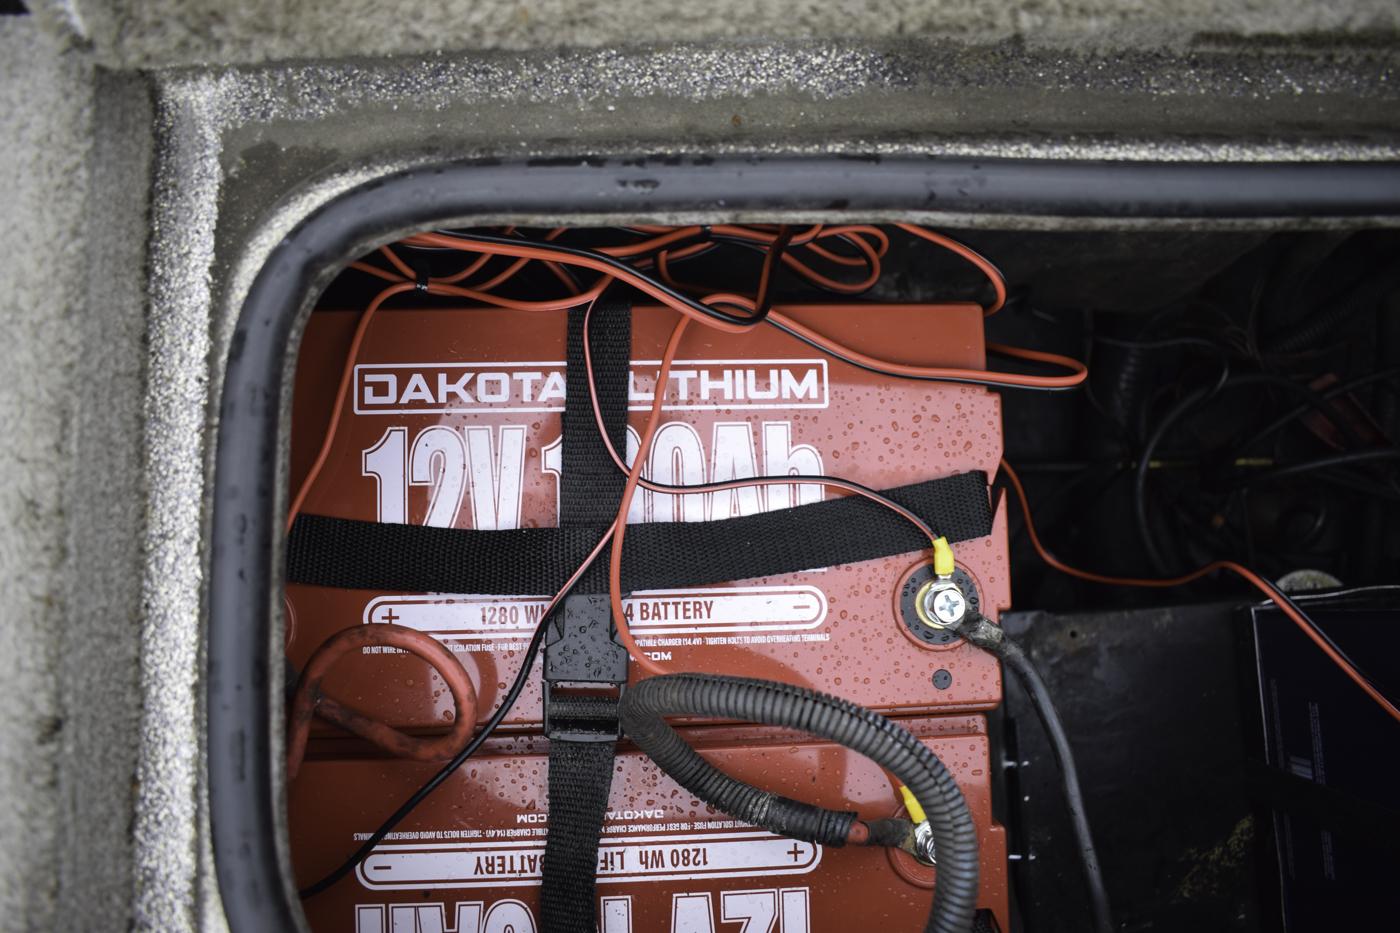 2 - 12V 100Ah Dakota Lithium Batteries in Series